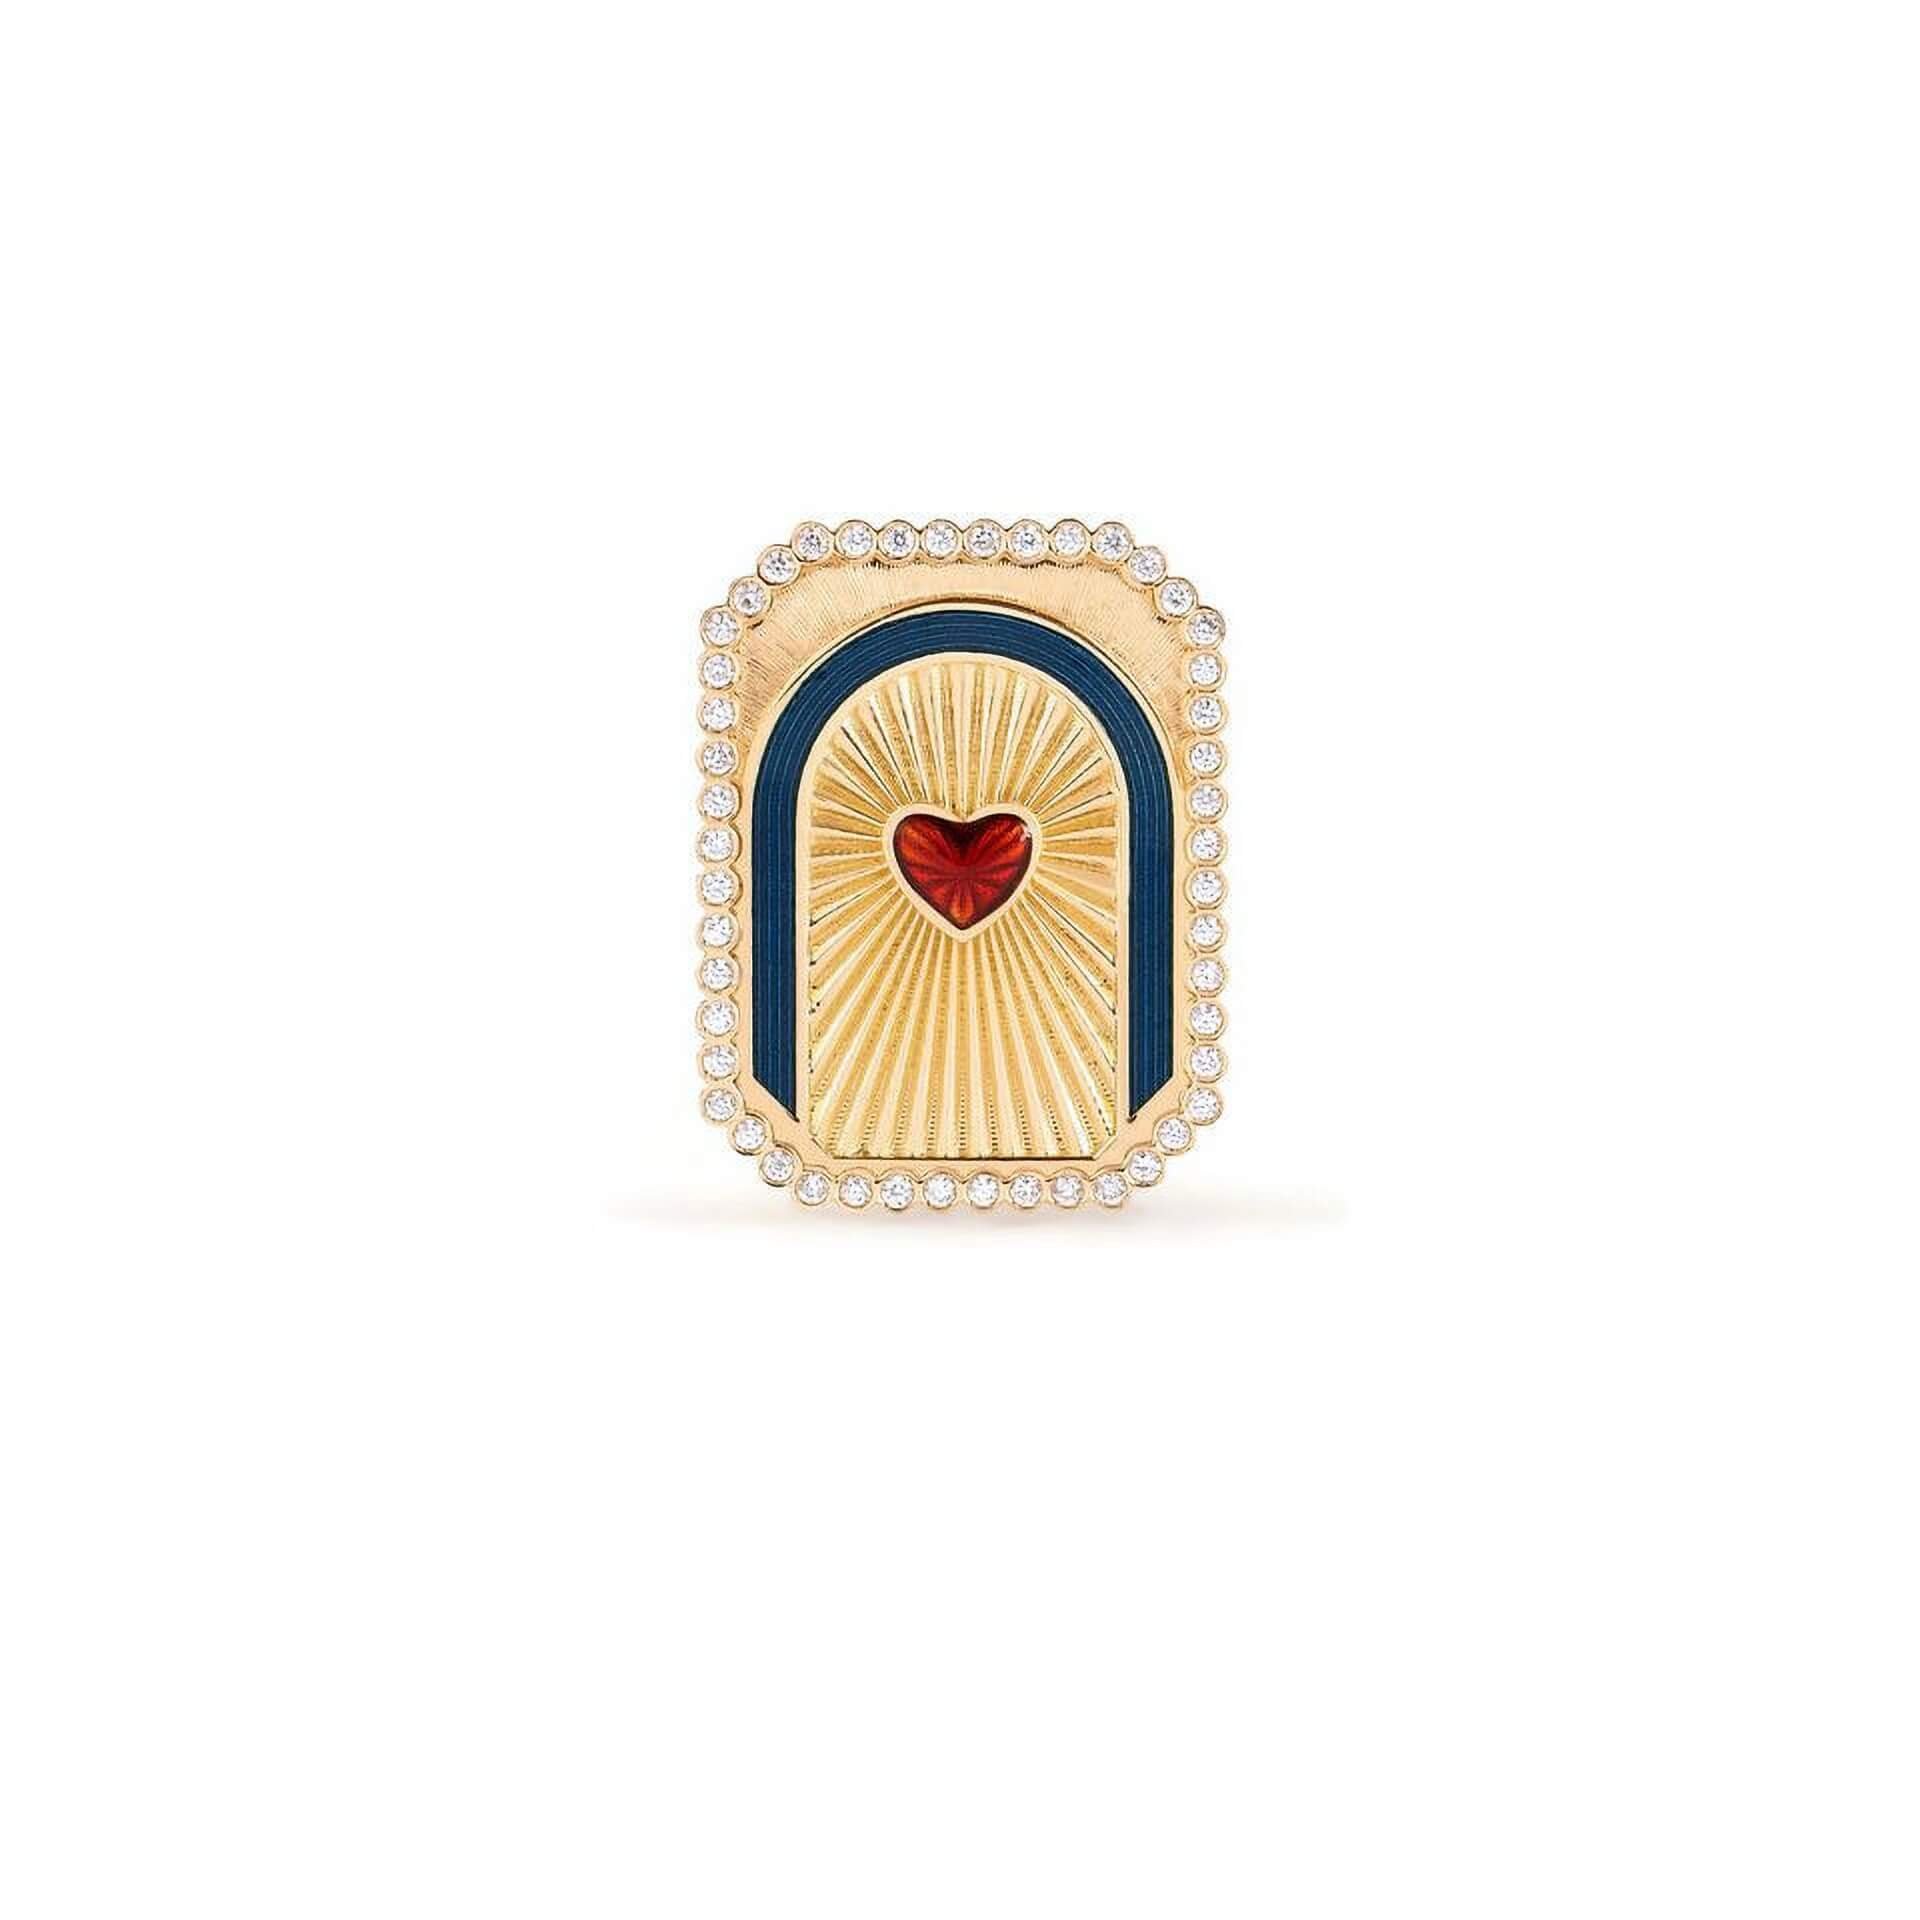 Heart mini "Scap" ring, $5,500